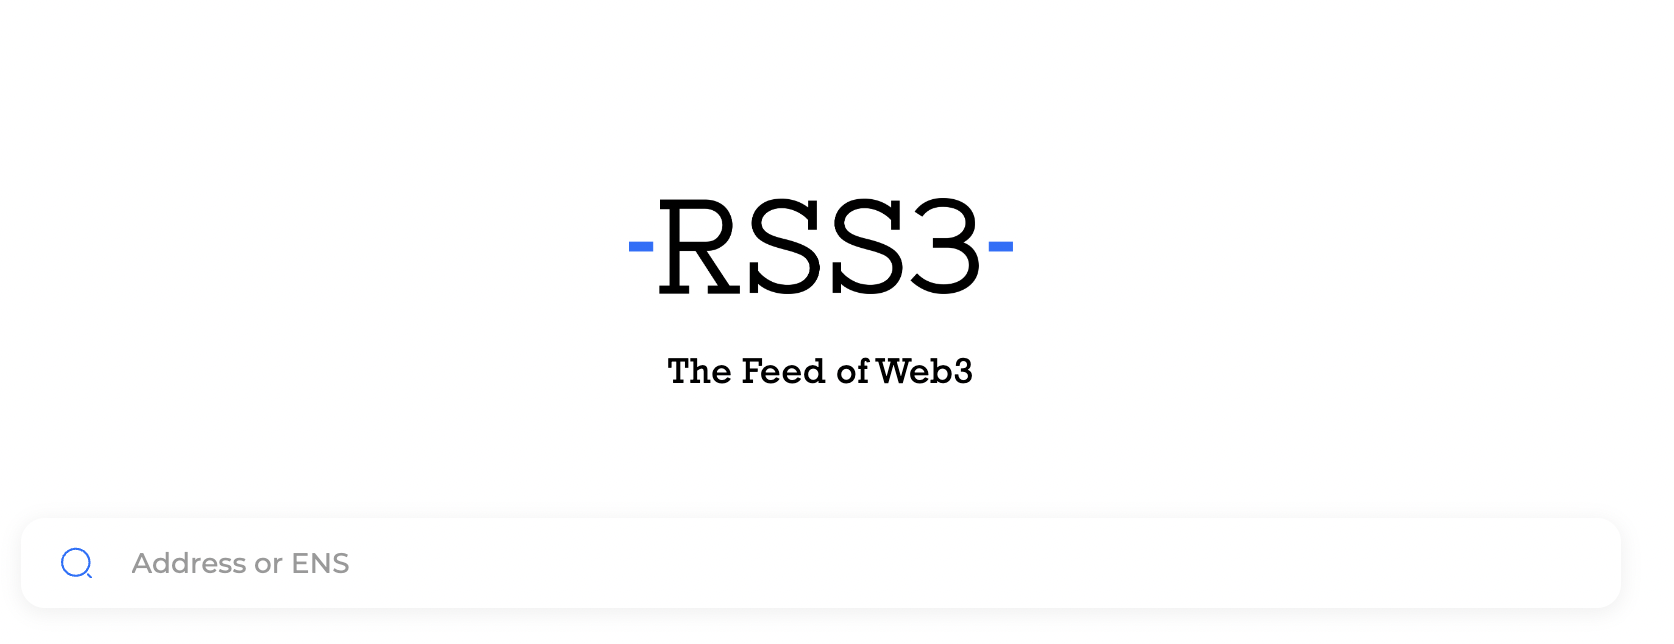 RSS3.io 正是此傳播技術的實現，可以在此輸入任何ENS，便能檢視並RSS訂閱其鏈上活動。